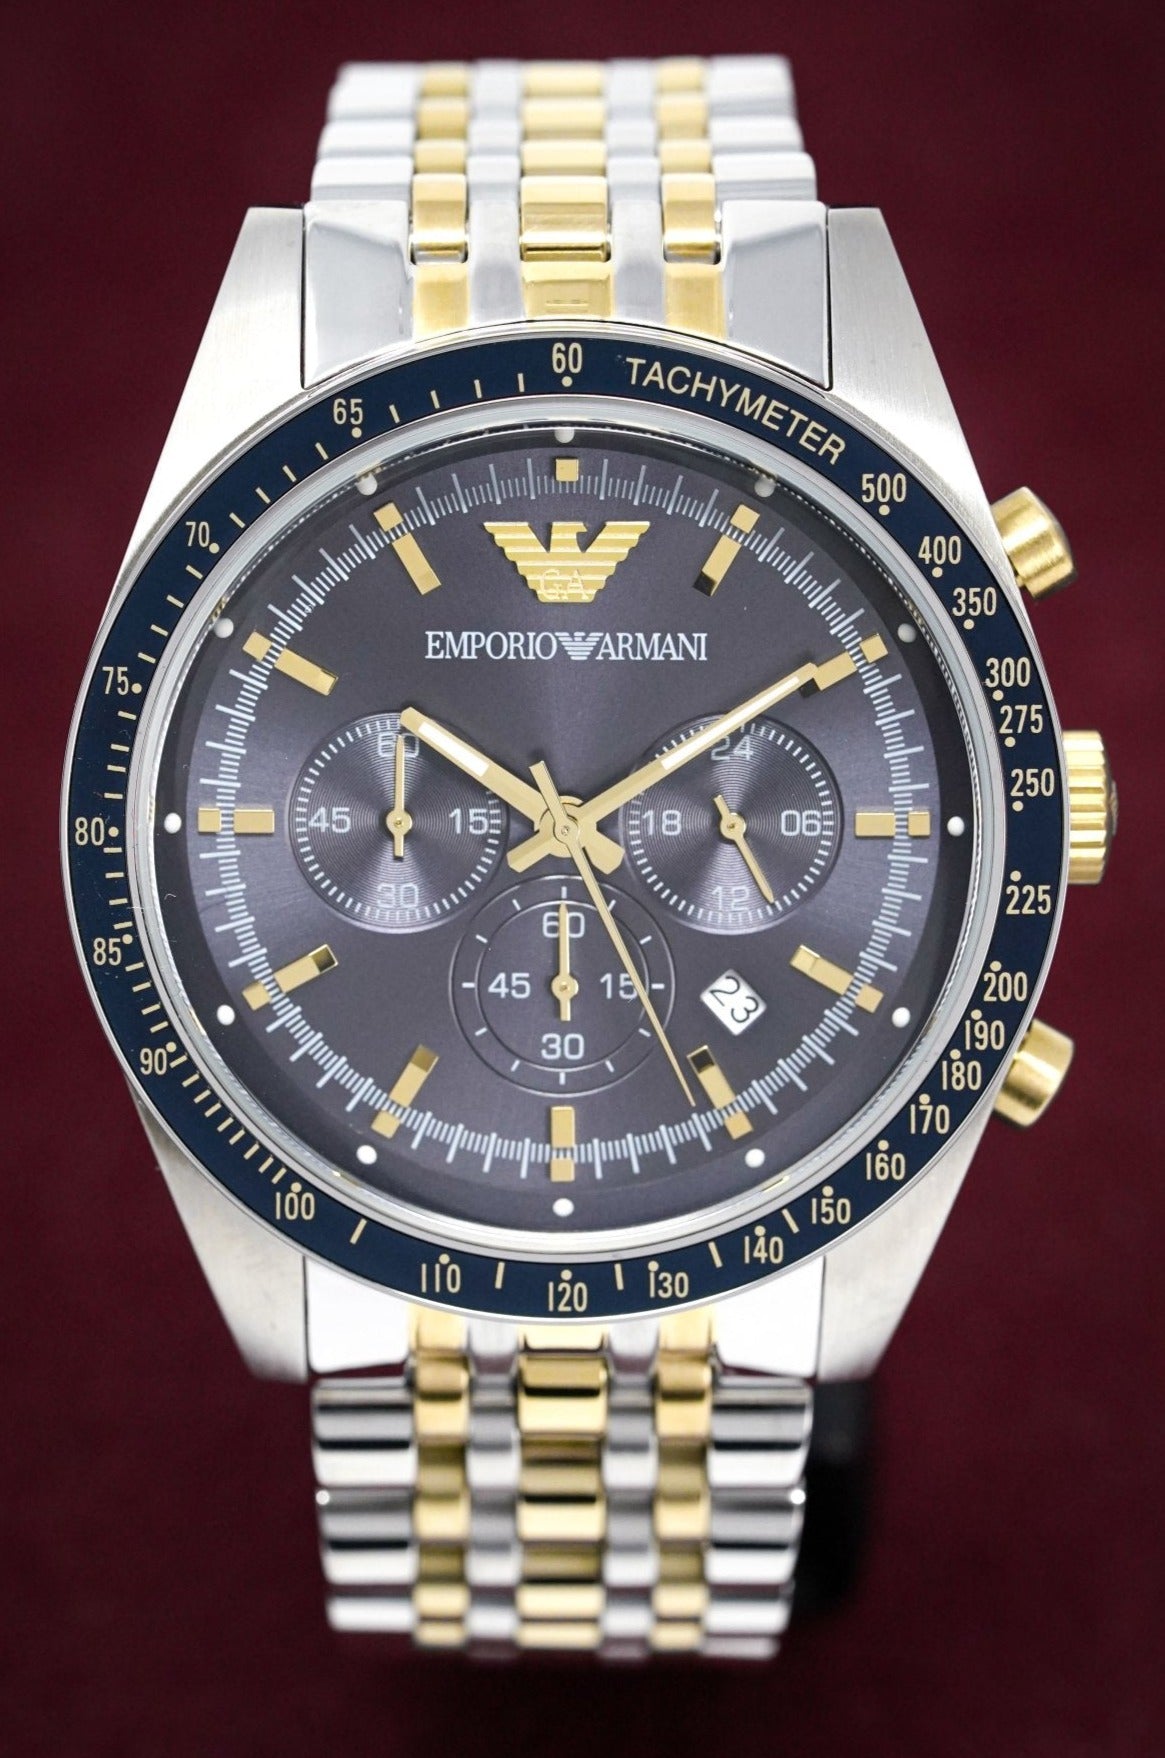 Chronograph Emporio Armani Watch Cheap Sale | website.jkuat.ac.ke